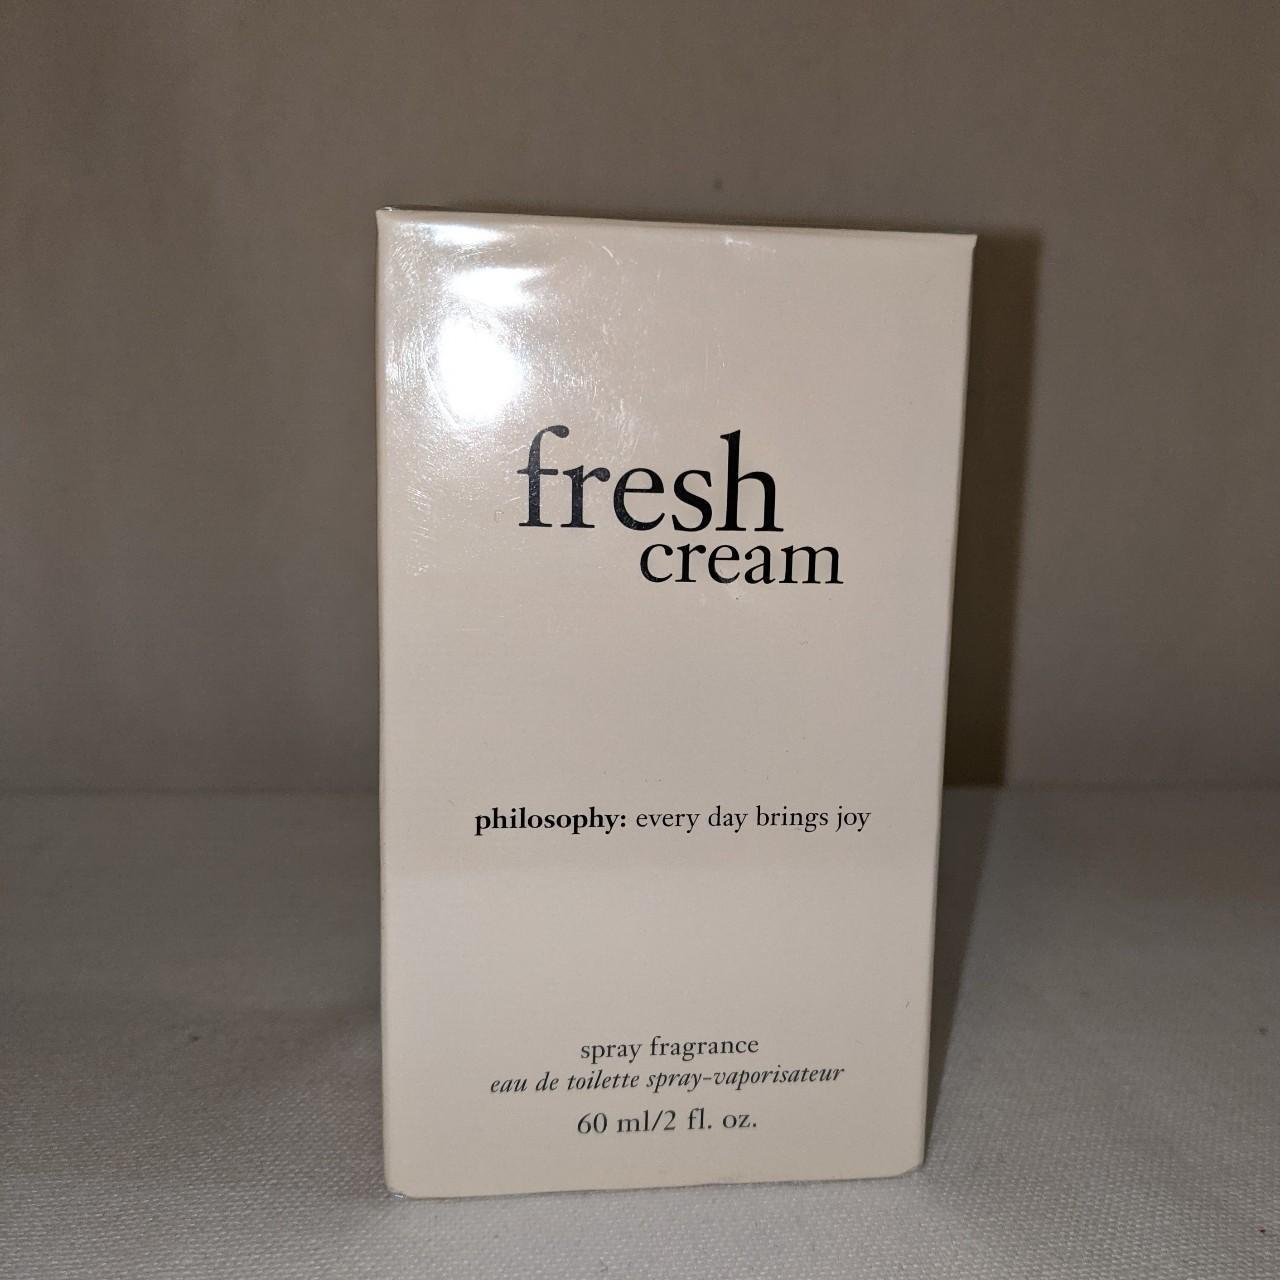 Product Image 2 - New Philosophy, fresh cream in